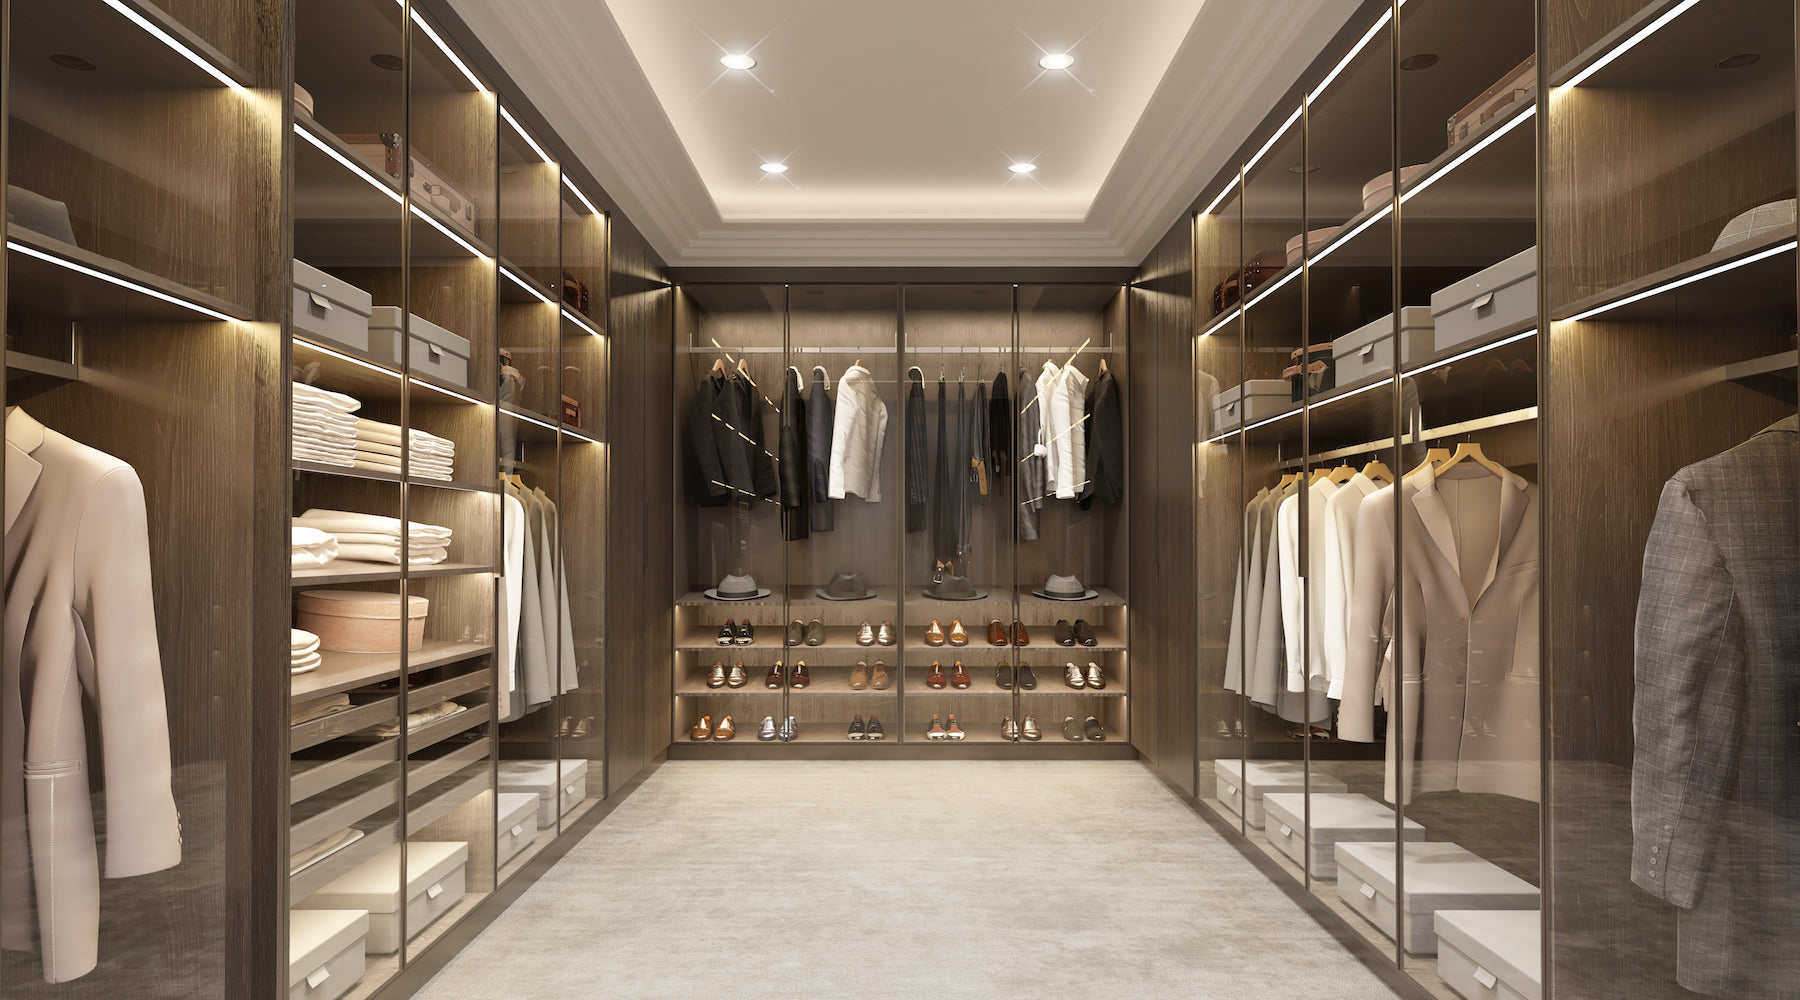 Closet lighting installed inside of luxury mens dressing area